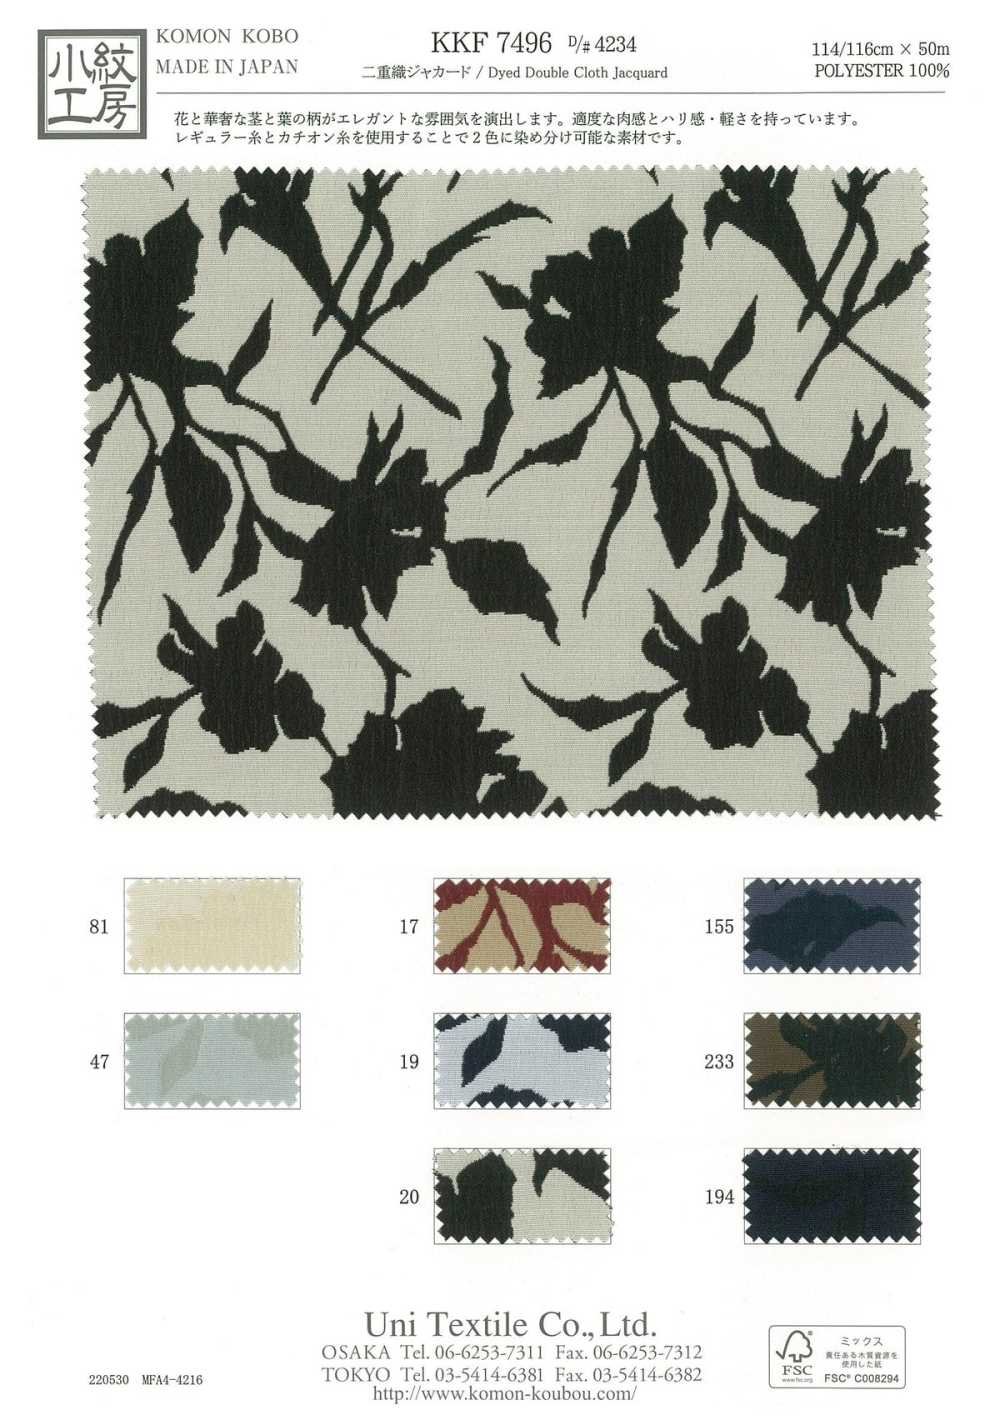 KKF7496-D-4234 Estampado Floral De Jacquard De Doble Tejido[Fabrica Textil] Uni Textile